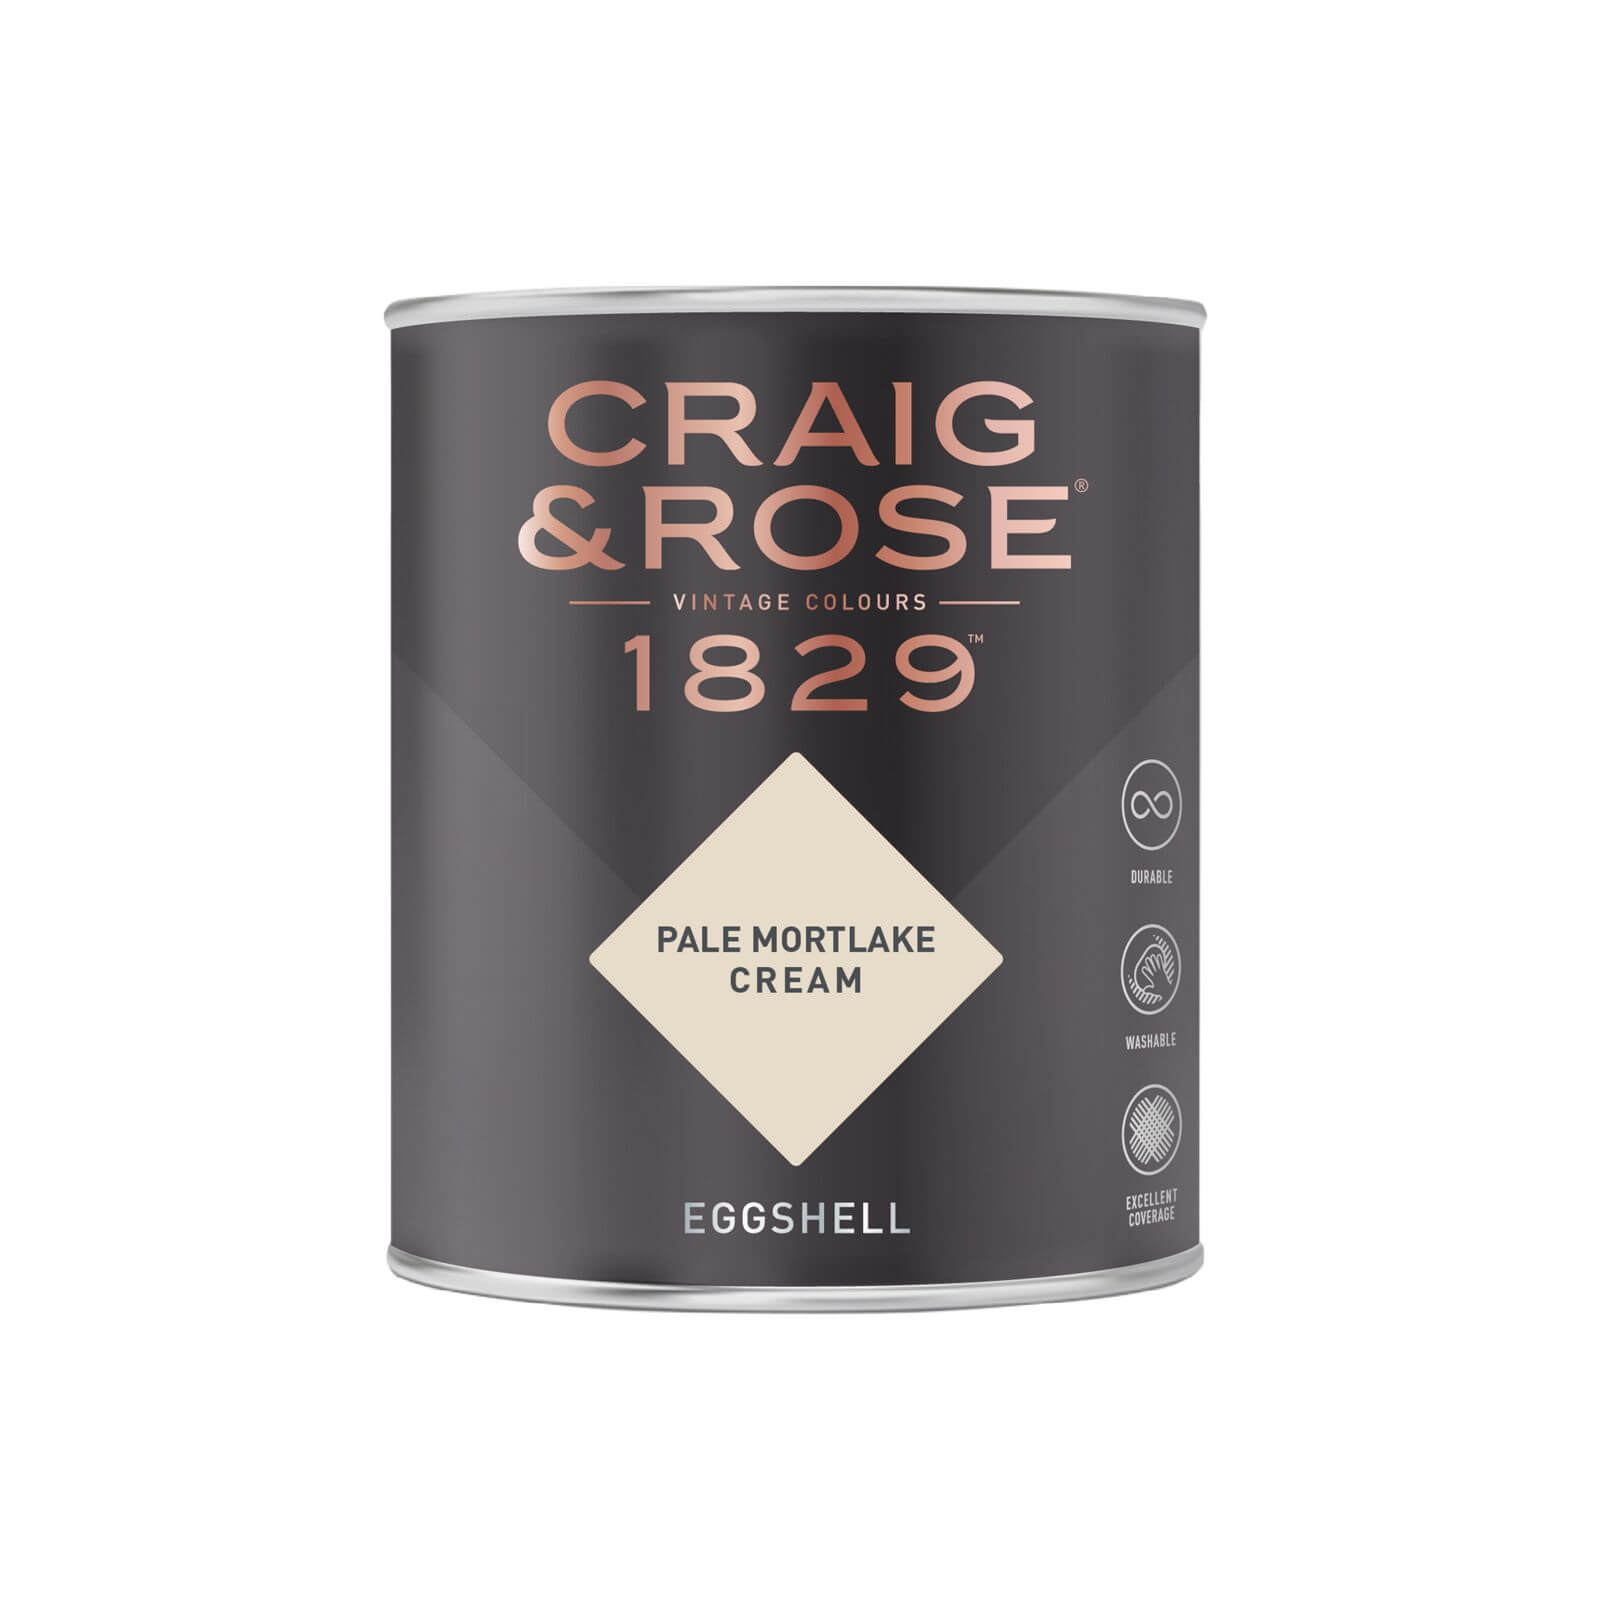 Craig & Rose 1829 Eggshell Paint Pale Mortlake Cream - 750ml